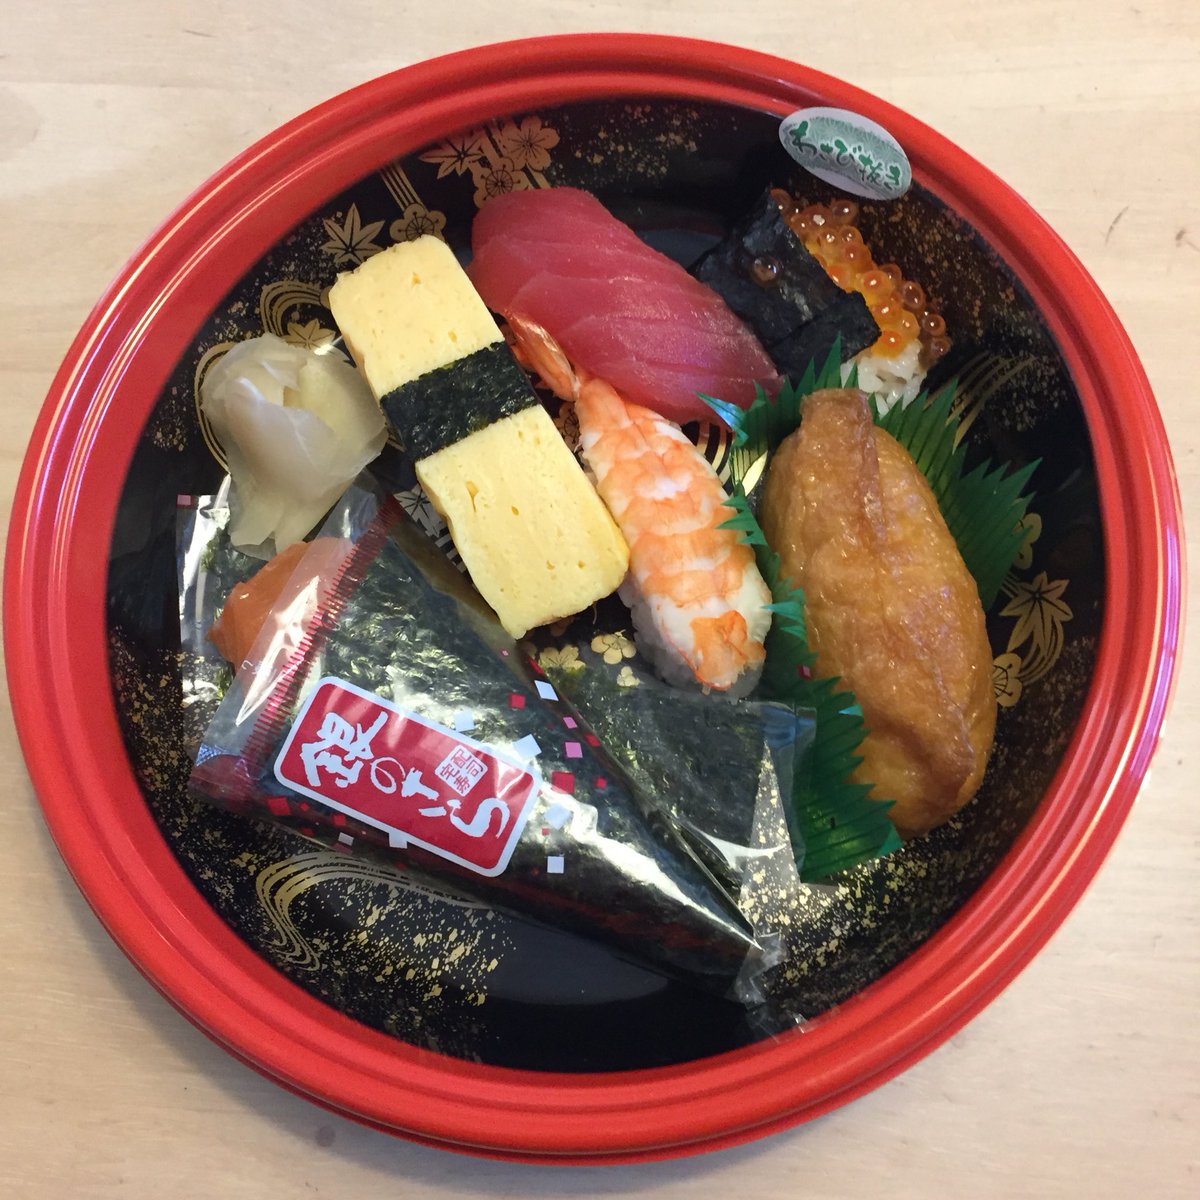 Sushi. 寿司🍣 #寿司 #鮨 #すし #正月 #新年 #日本 #1月2日 #美味しい #グルメ #2018年 #年始 #明けましておめでとうございます #sushi #newyear #happynewyear #delicious #2018 #January2nd #lecker #neuesjahr #Jahr2018 #jahresanfang #januar #昼食 #gourmet #NewYearHoliday #mittagessen